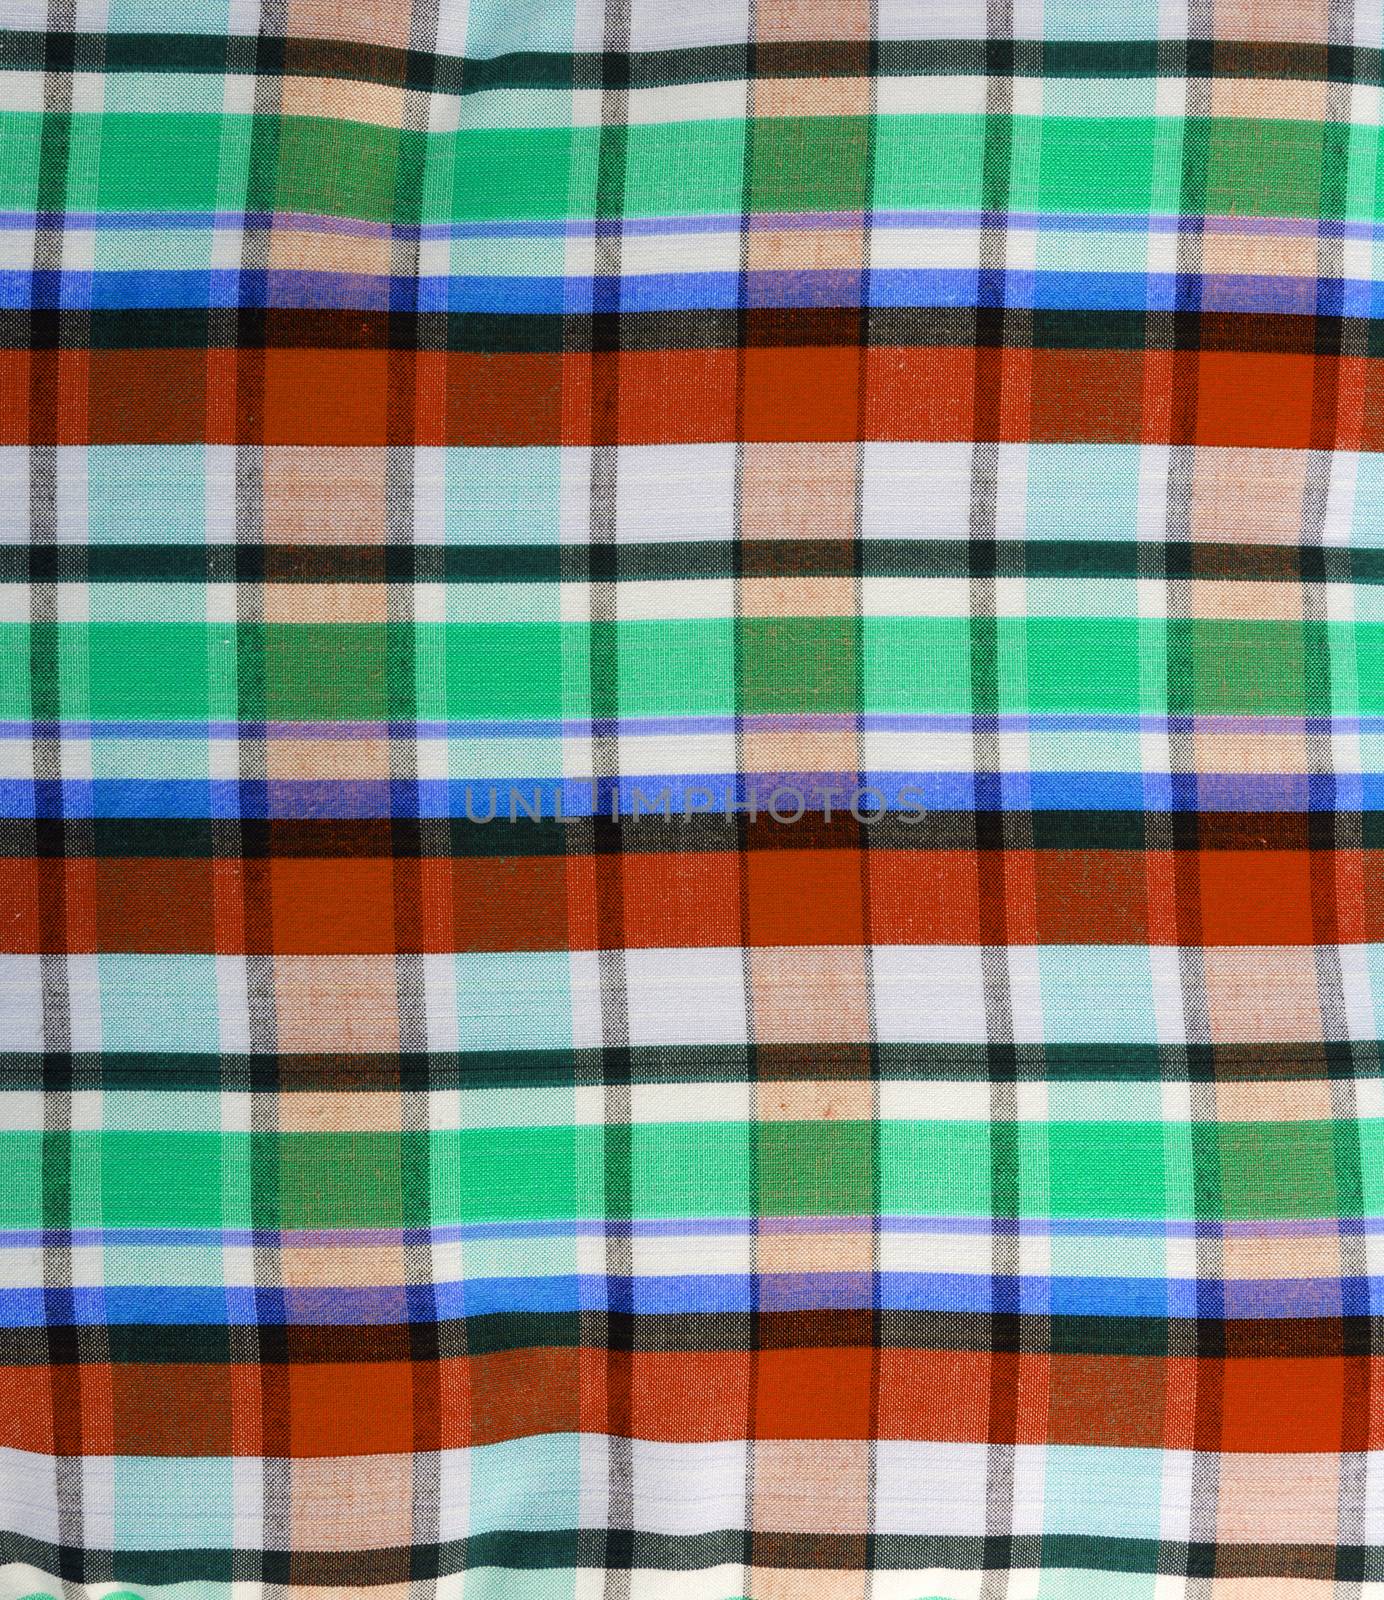 Thai style loincloth, Closeup texture of Fabric